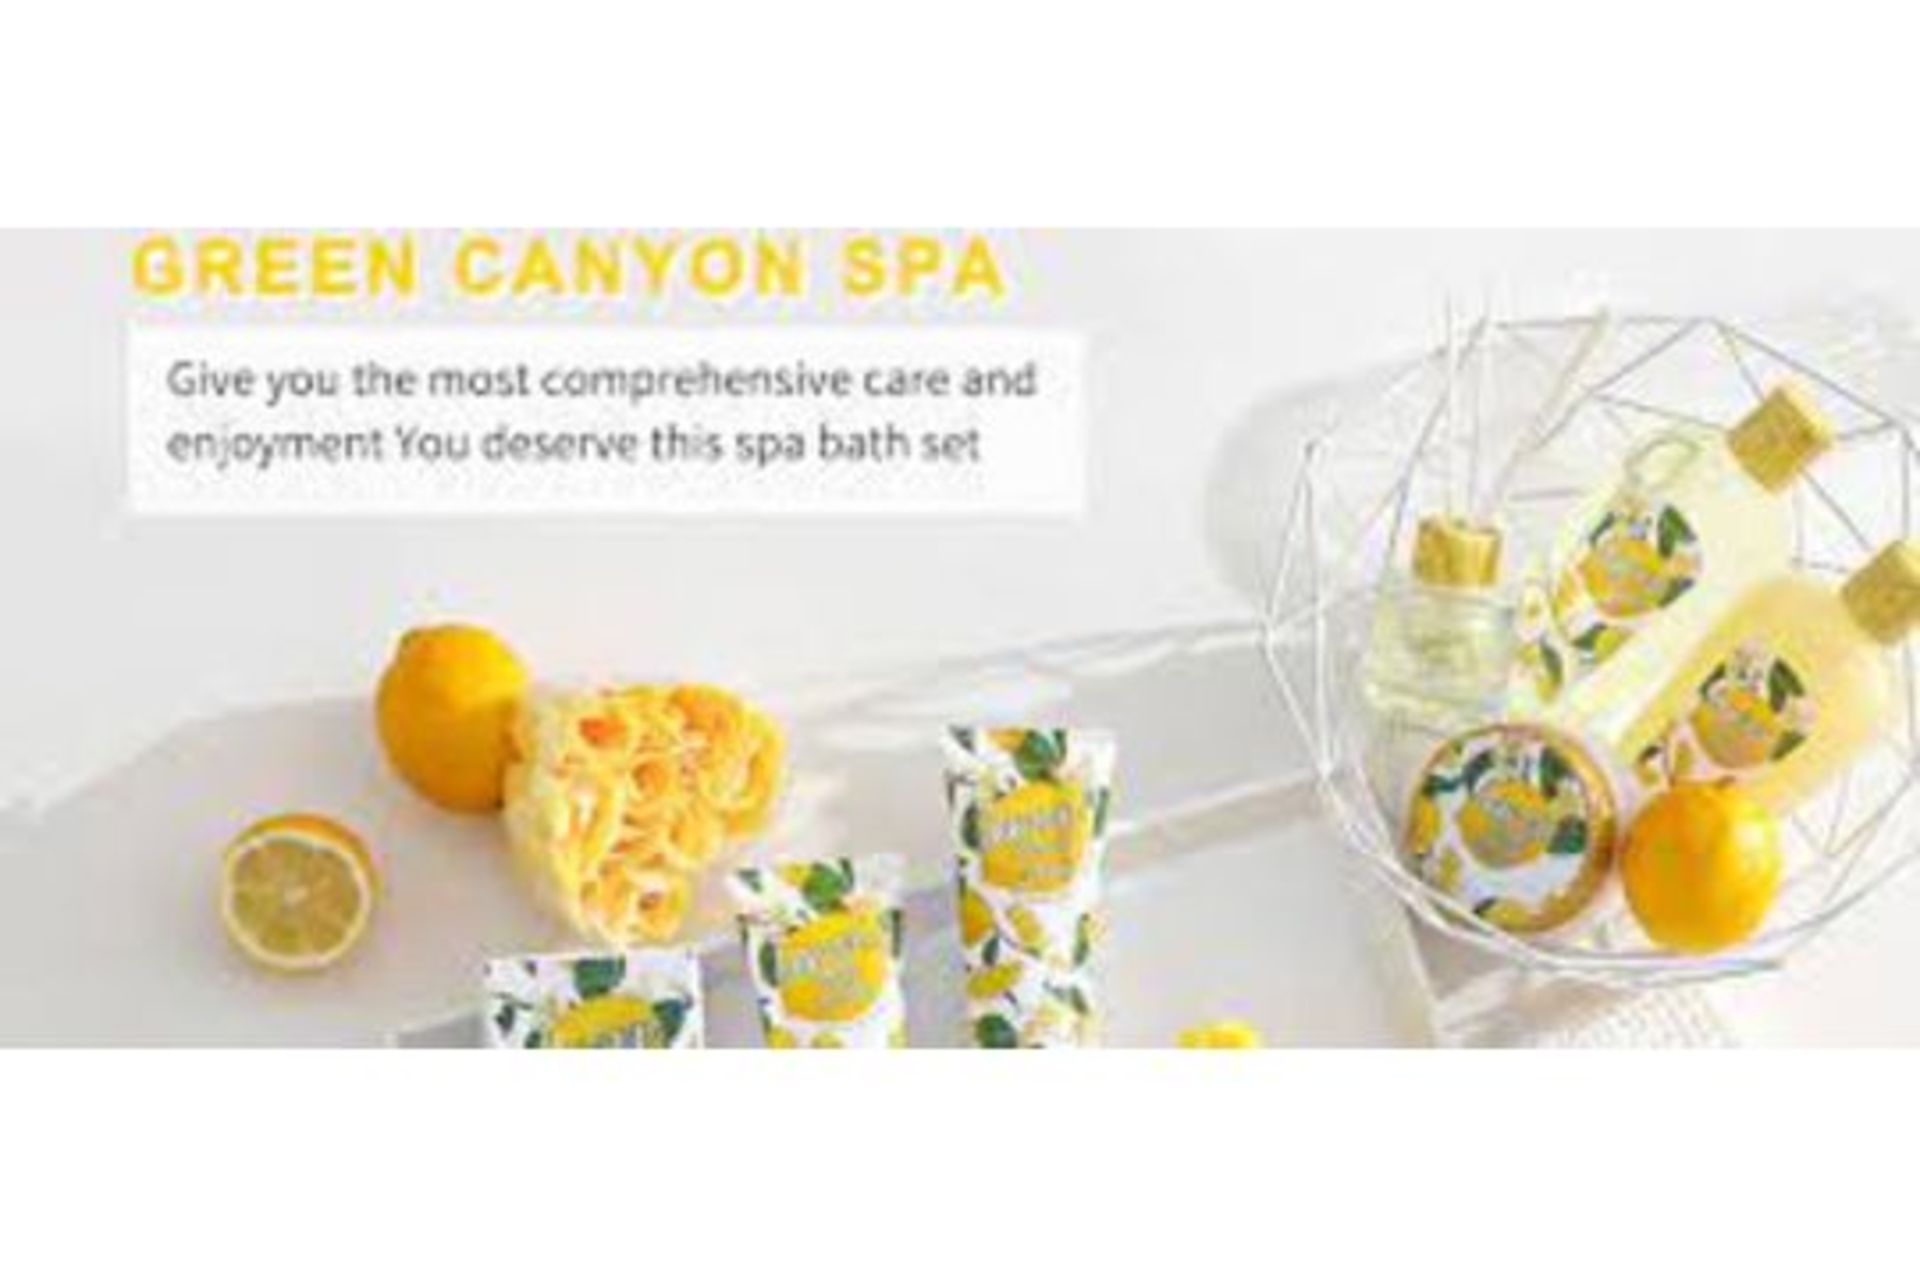 4 X NEW PACKAGED Lemon Everyday Bath Set Tote Gift Sets. (SKU: BEL-SC-03). Home Spa Kit Meets Your - Image 2 of 2